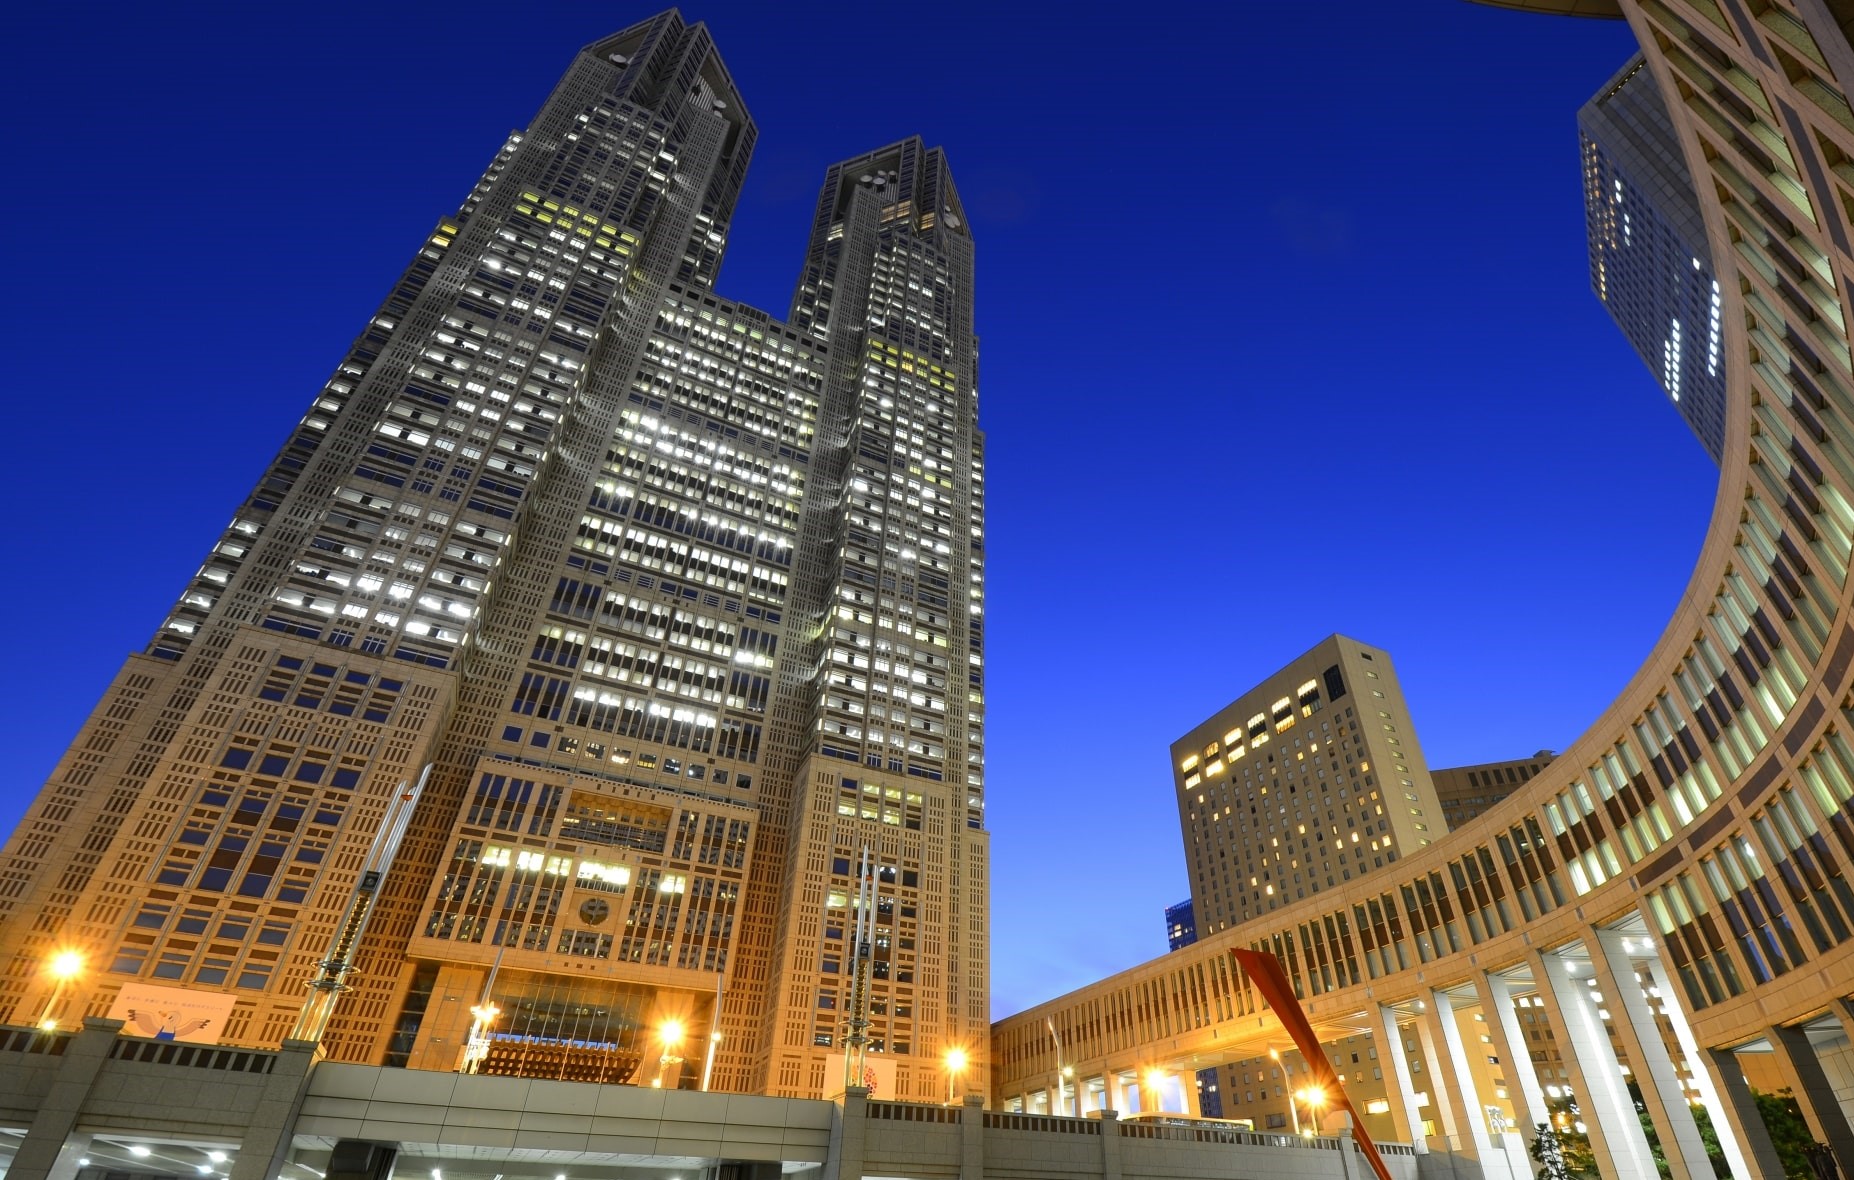 Tokyo Metropolitan Government Building at night